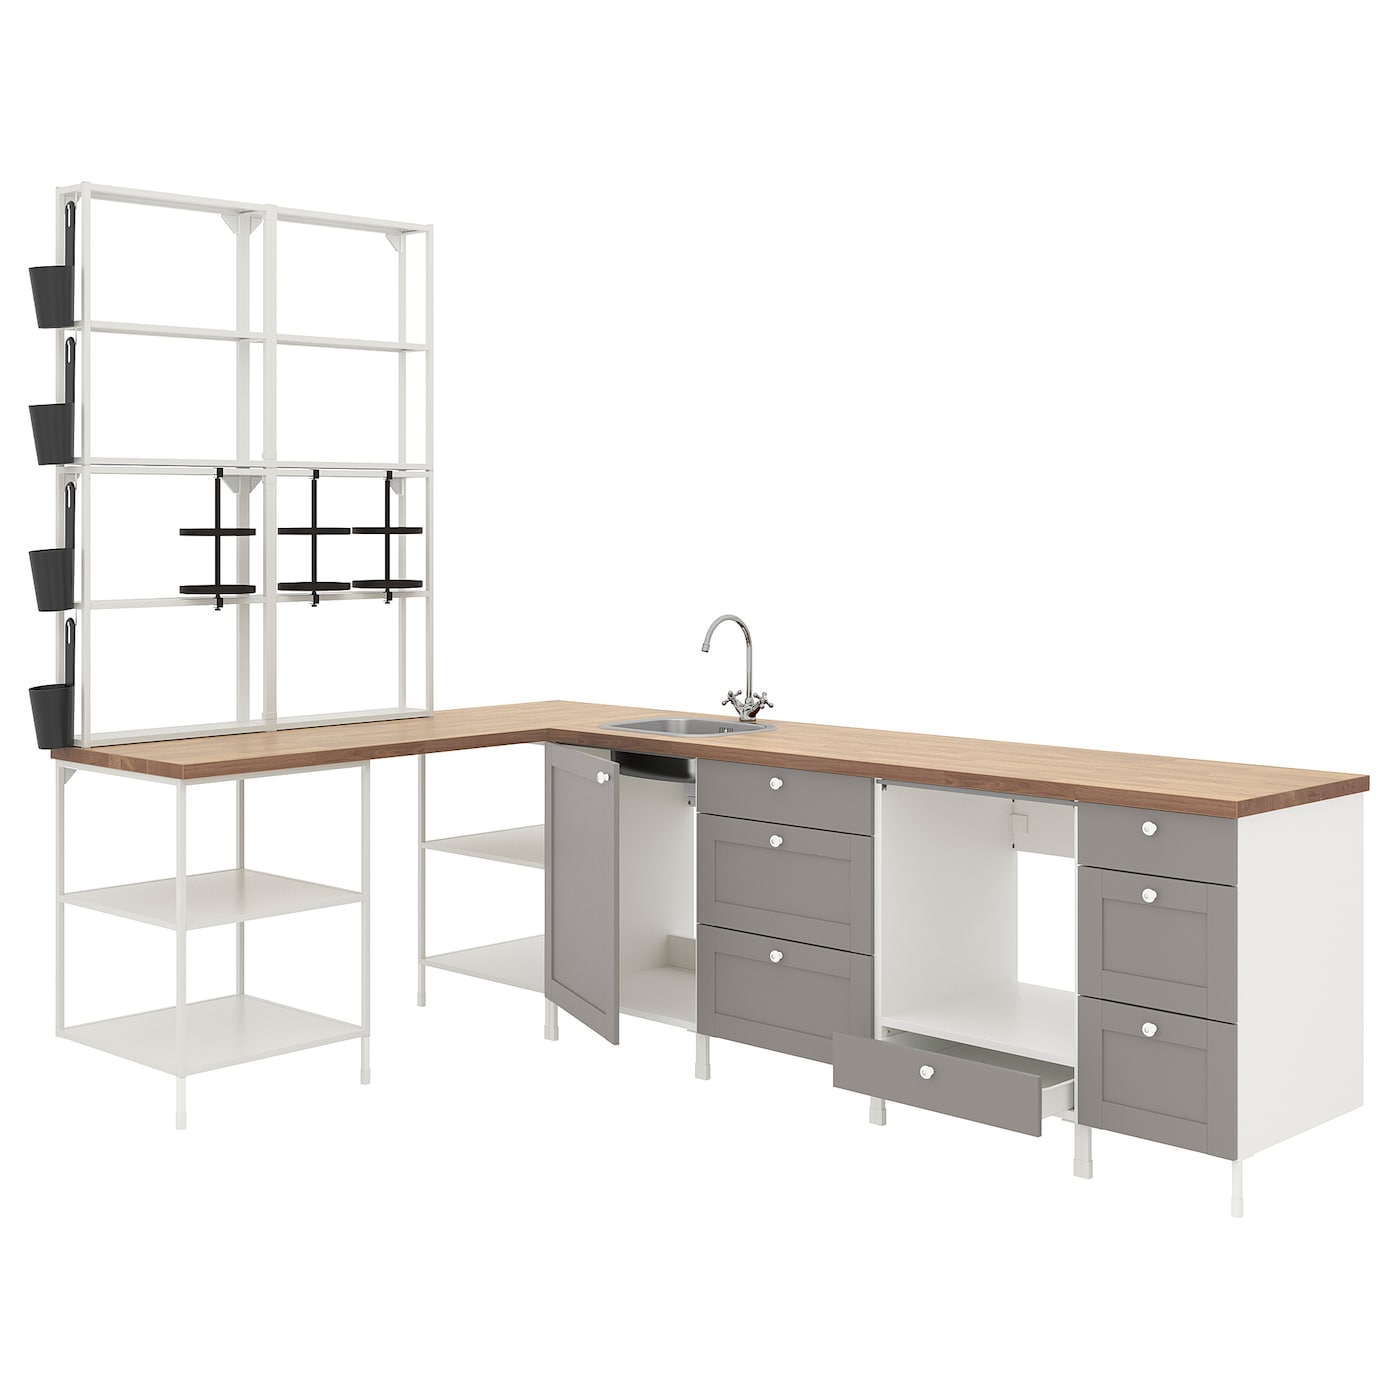 Угловая кухонная комбинация для хранения - ENHET  IKEA/ ЭНХЕТ ИКЕА, 181,5х281,5х75 см, белый/серый/бежевый